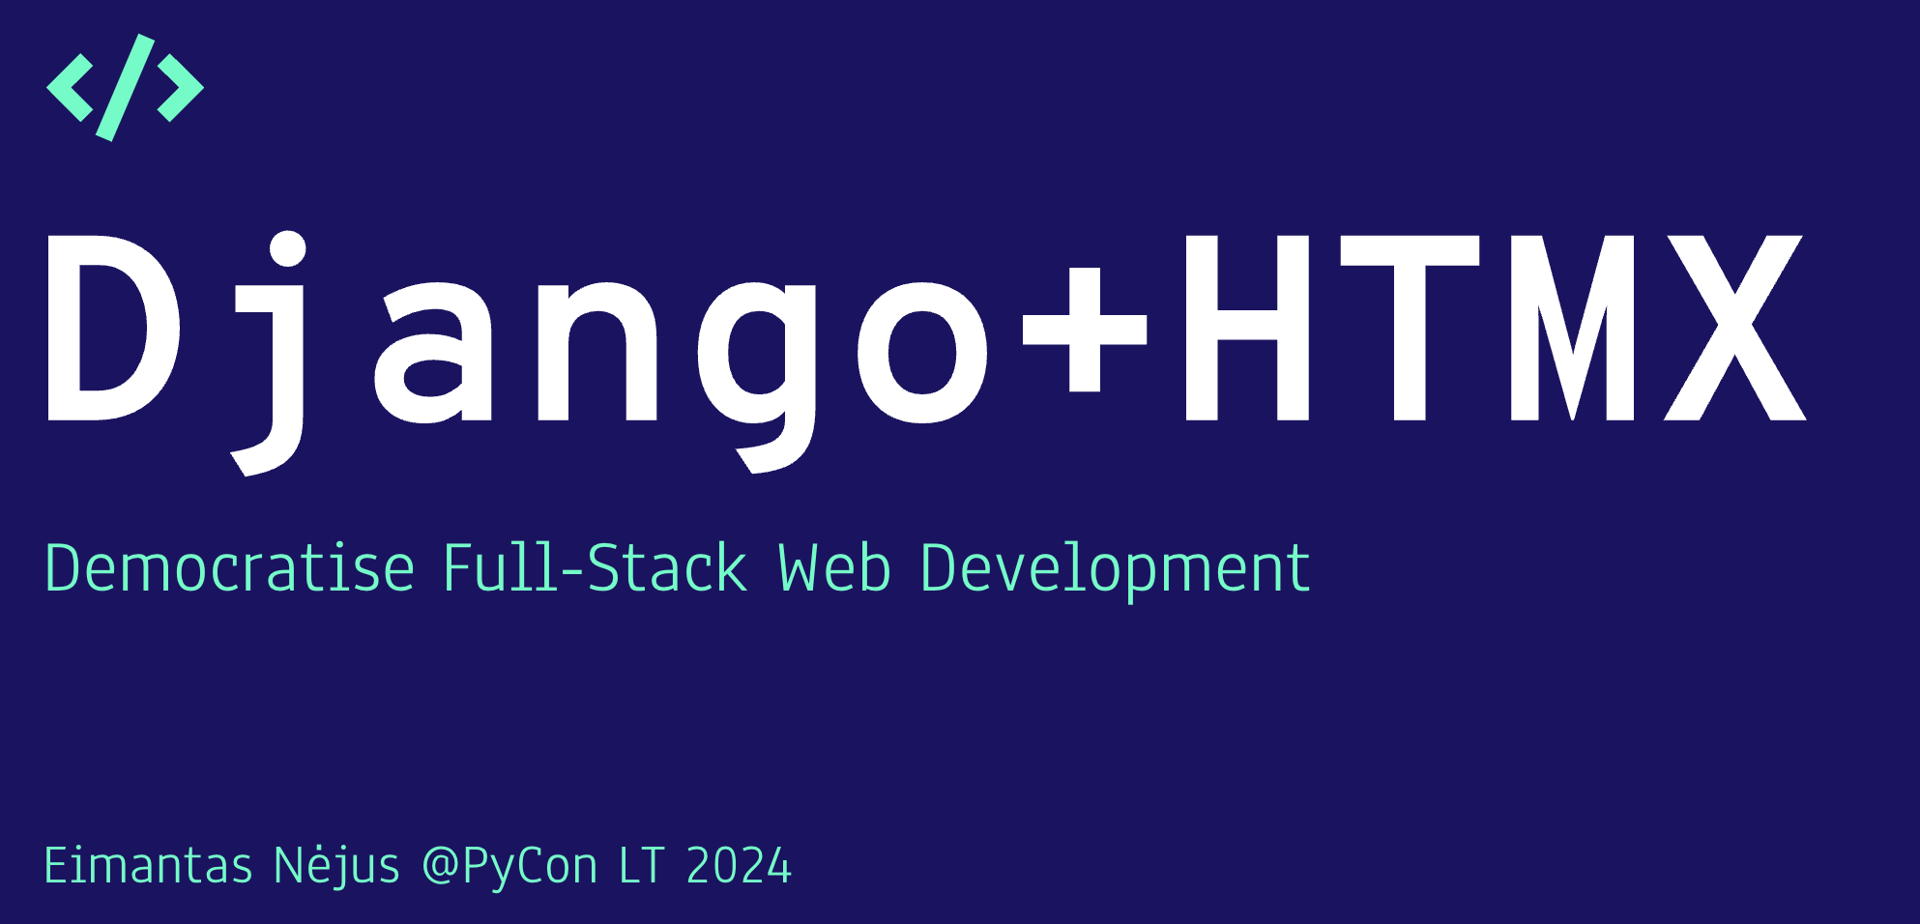 Django + HTMX: Democratise Full Stack Web Development